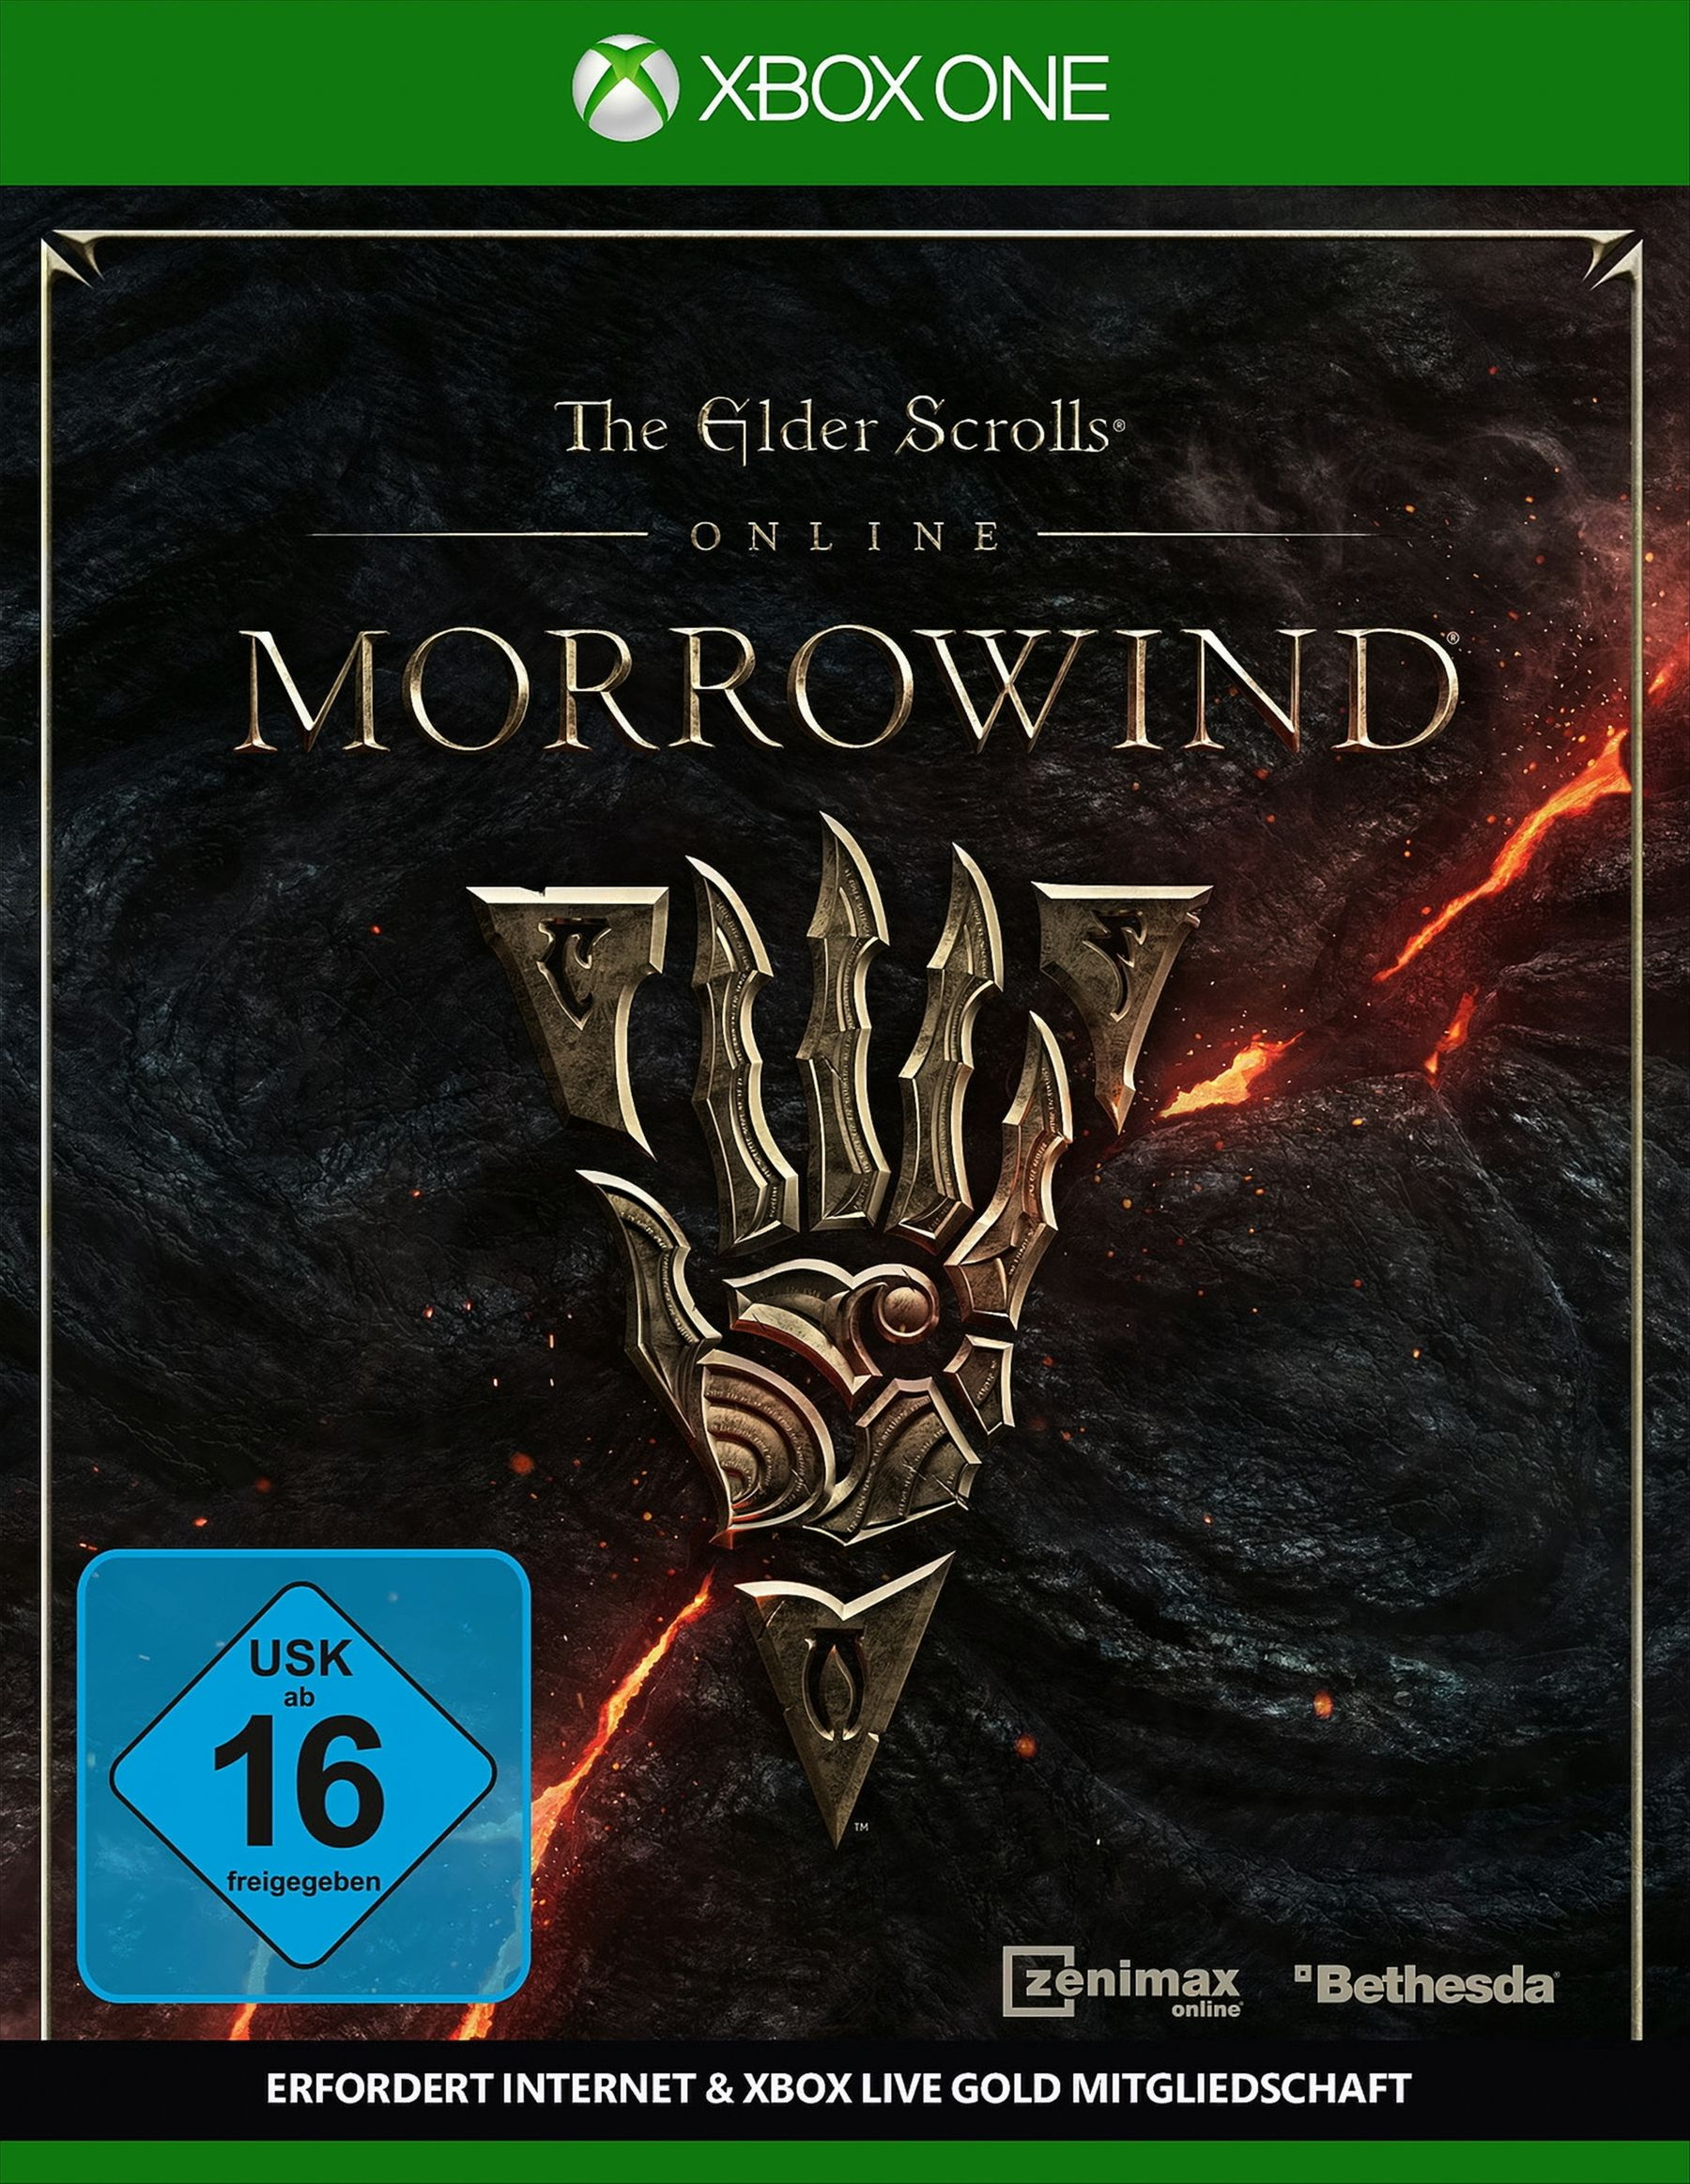 Online: Elder Scrolls - The [Xbox Morrowind One]